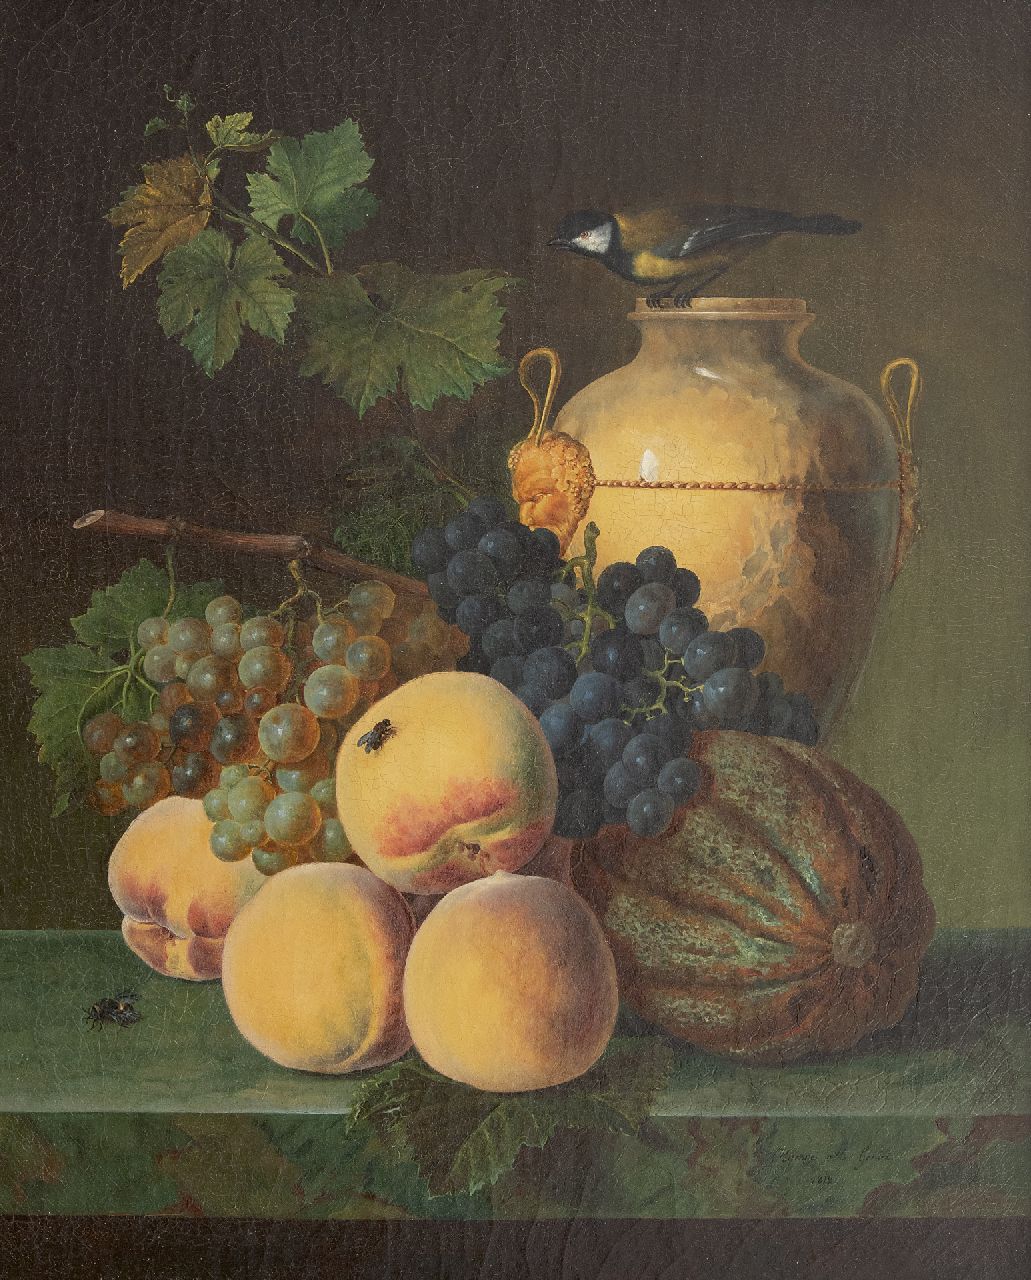 Olympe Mouette Génin | Stilleven met perziken, kruik en vogeltje, olieverf op doek, 49,0 x 39,9 cm, gesigneerd r.o. en gedateerd 1818